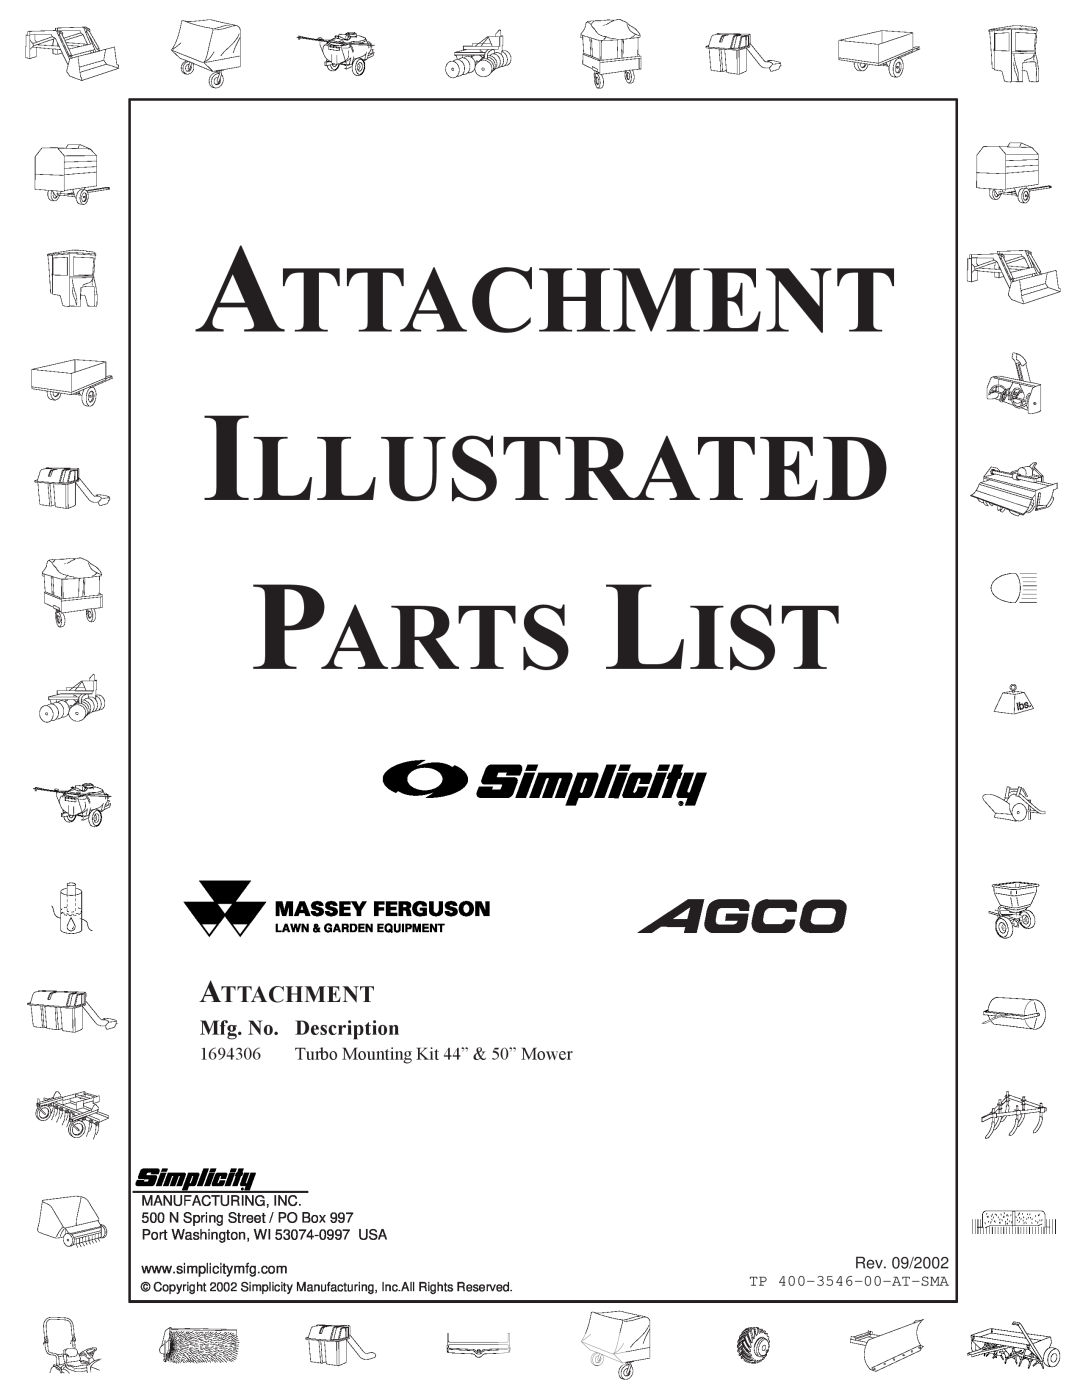 Snapper manual TP 400-3546-00-AT-SMA, Attachment Illustrated Parts List, Mfg. No. Description, Rev. 09/2002 